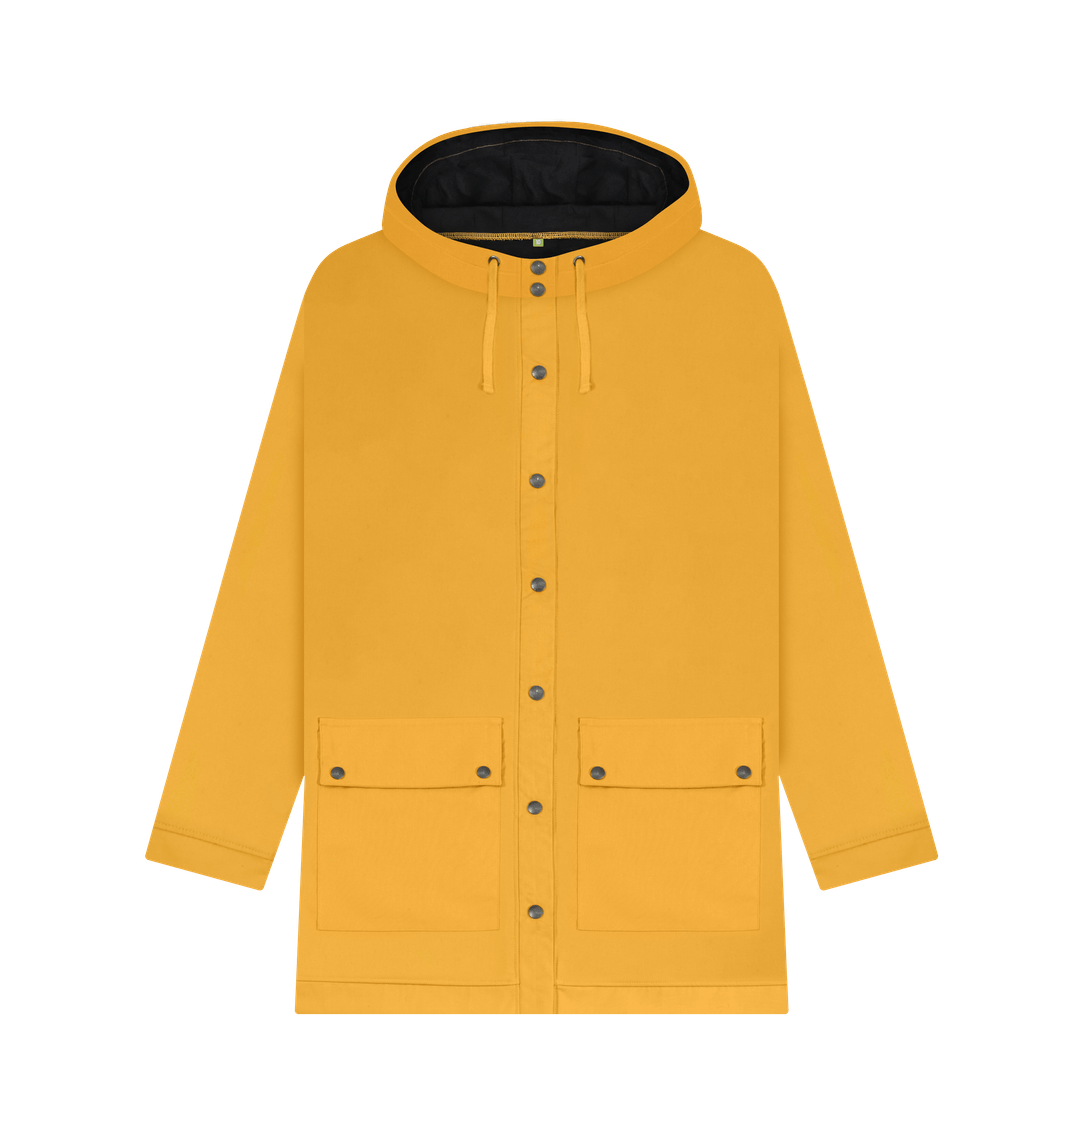 Women’s Lined Maritime Jacket - Jackets & coats